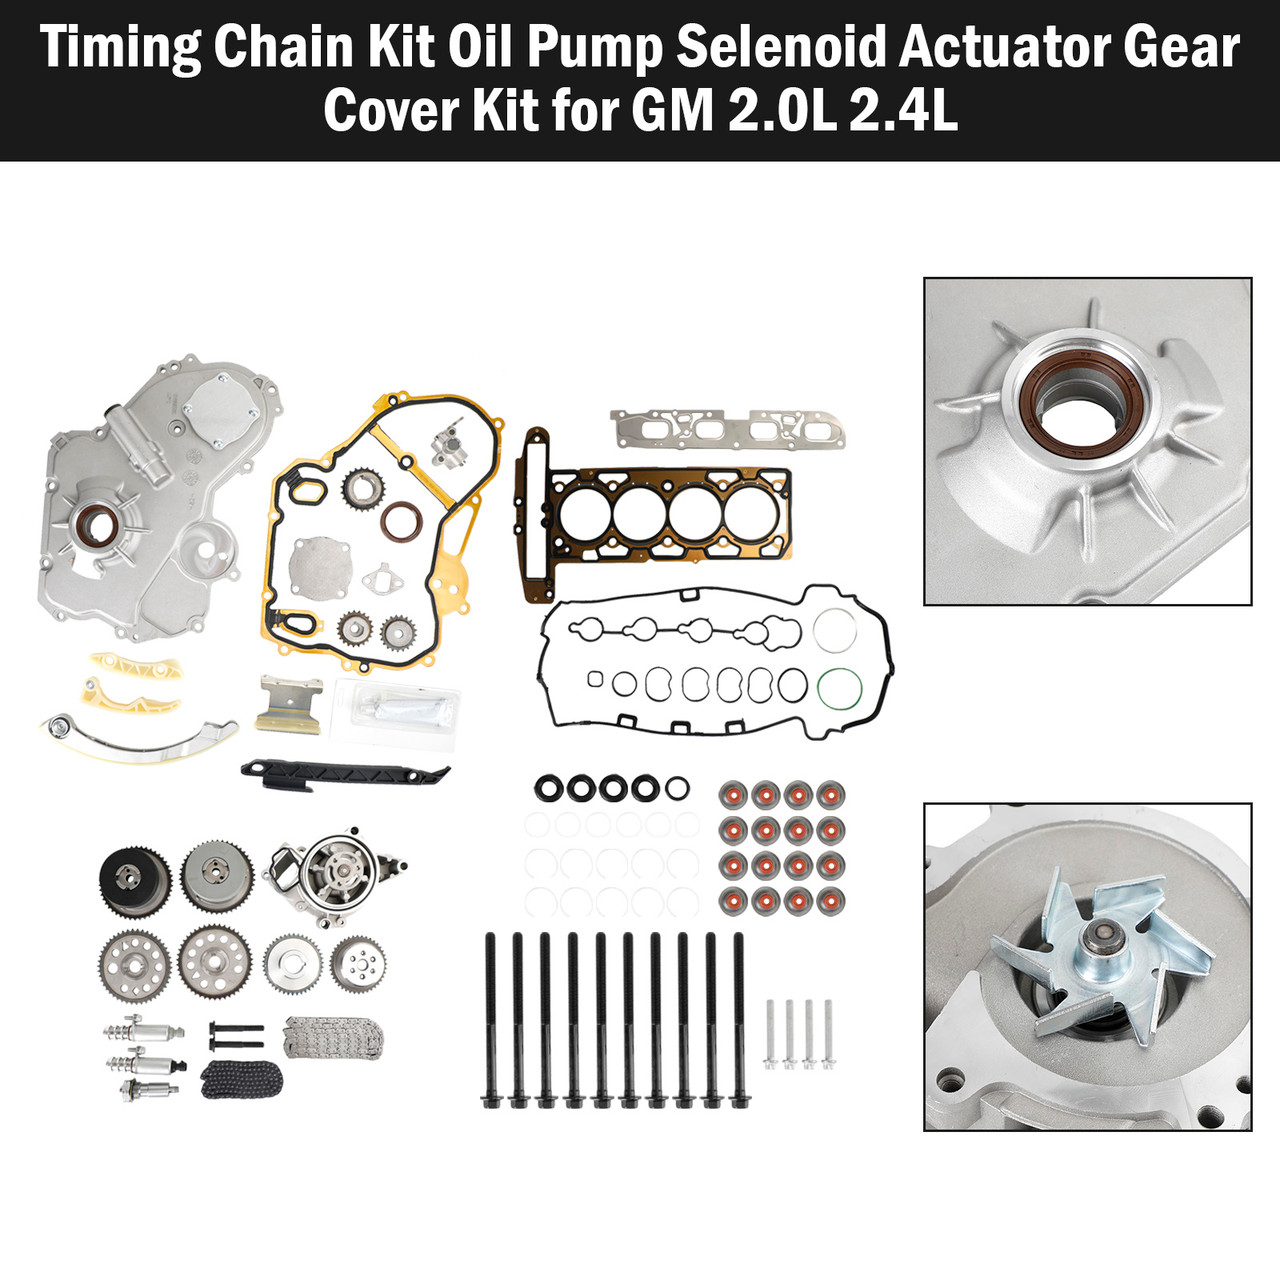 2009-2011 CHEVROLET HHR 2.4L Timing Chain Kit Oil Pump Selenoid Actuator Gear Cover Kit